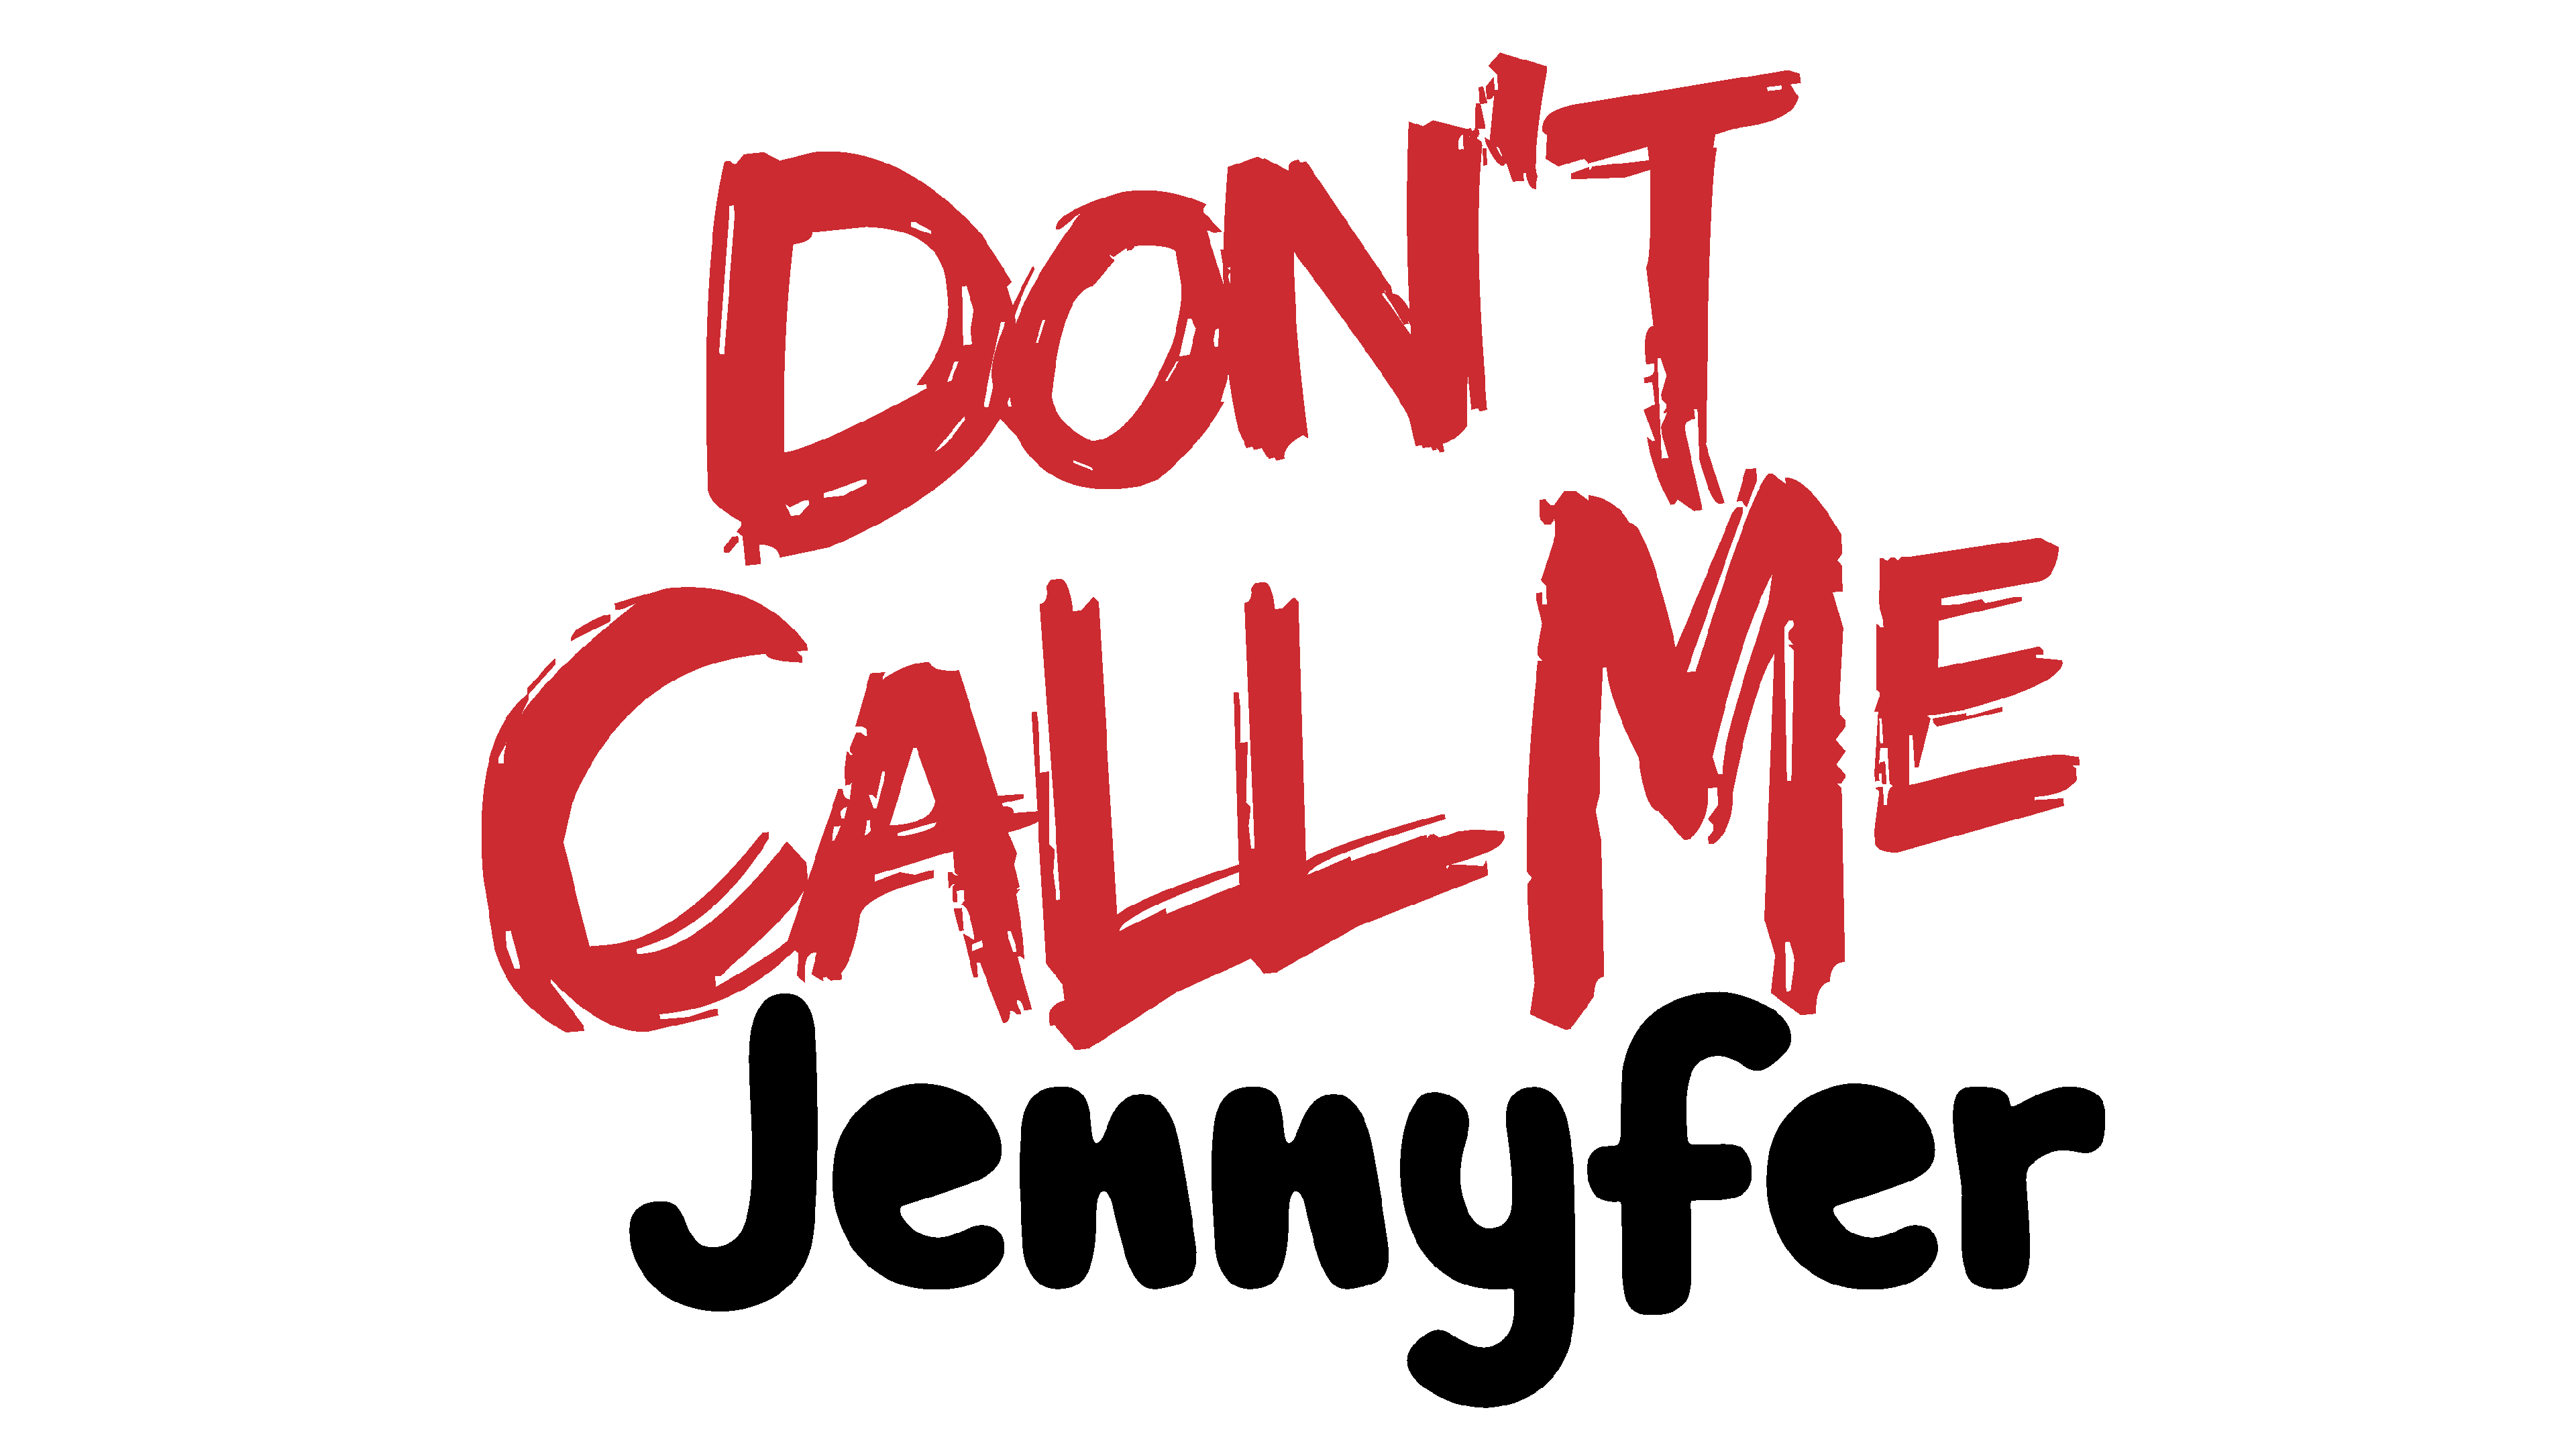 Call me jennifer одежда. Dont Call me Jennyfer. Dont Call me Jennyfer бренд. Dont Call me Jennifer одежда. Don't Call me Jennifer платья.